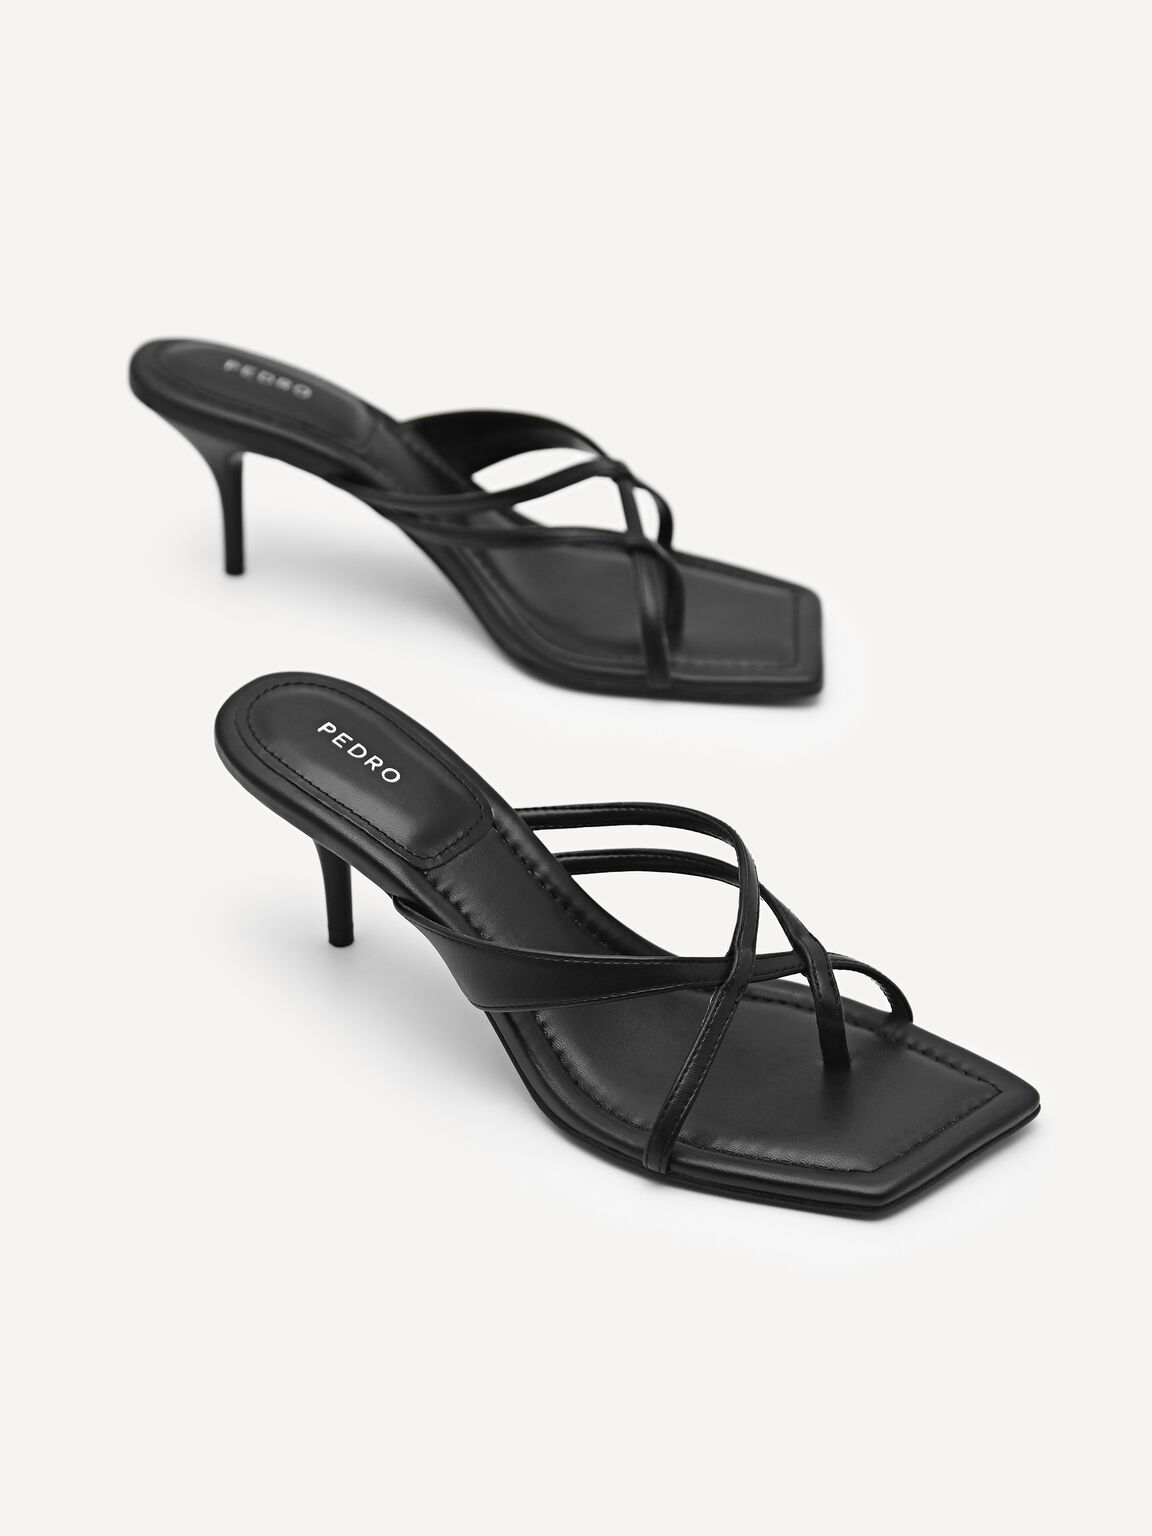 Dessau Heel Sandals, Black